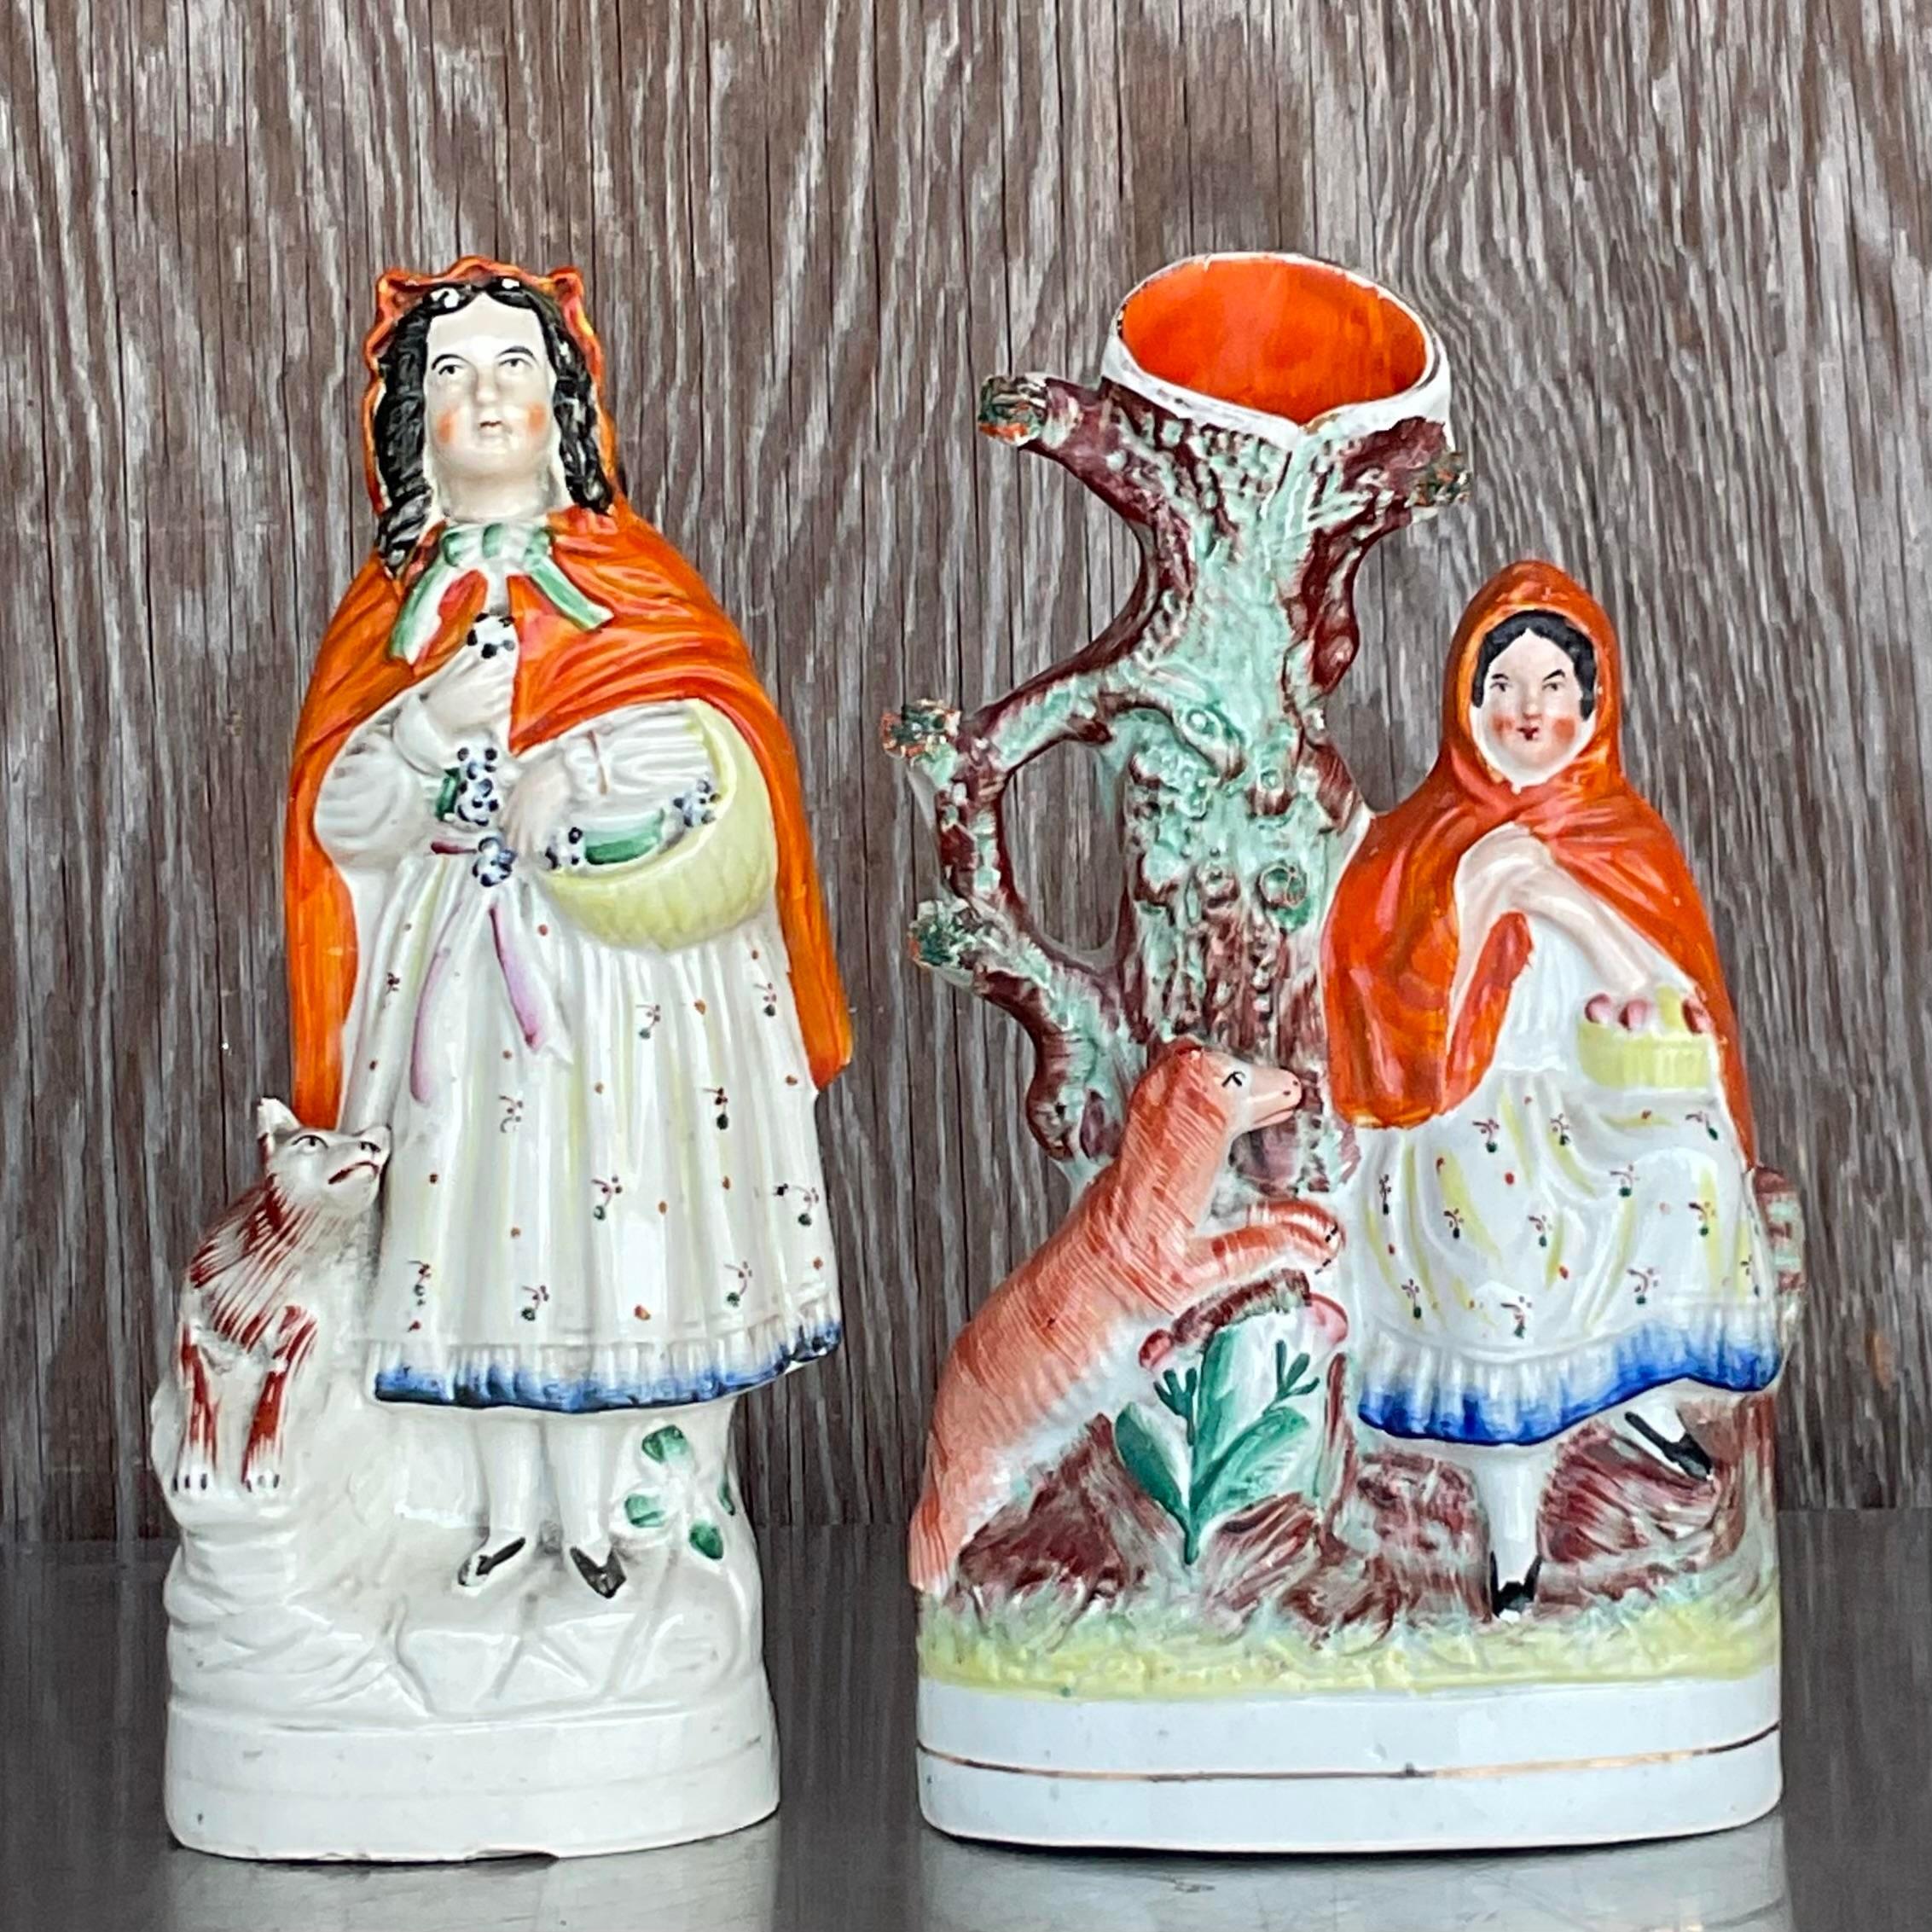 Vintage Regency Staffordshire Style Figurines - Set of 2 For Sale 1